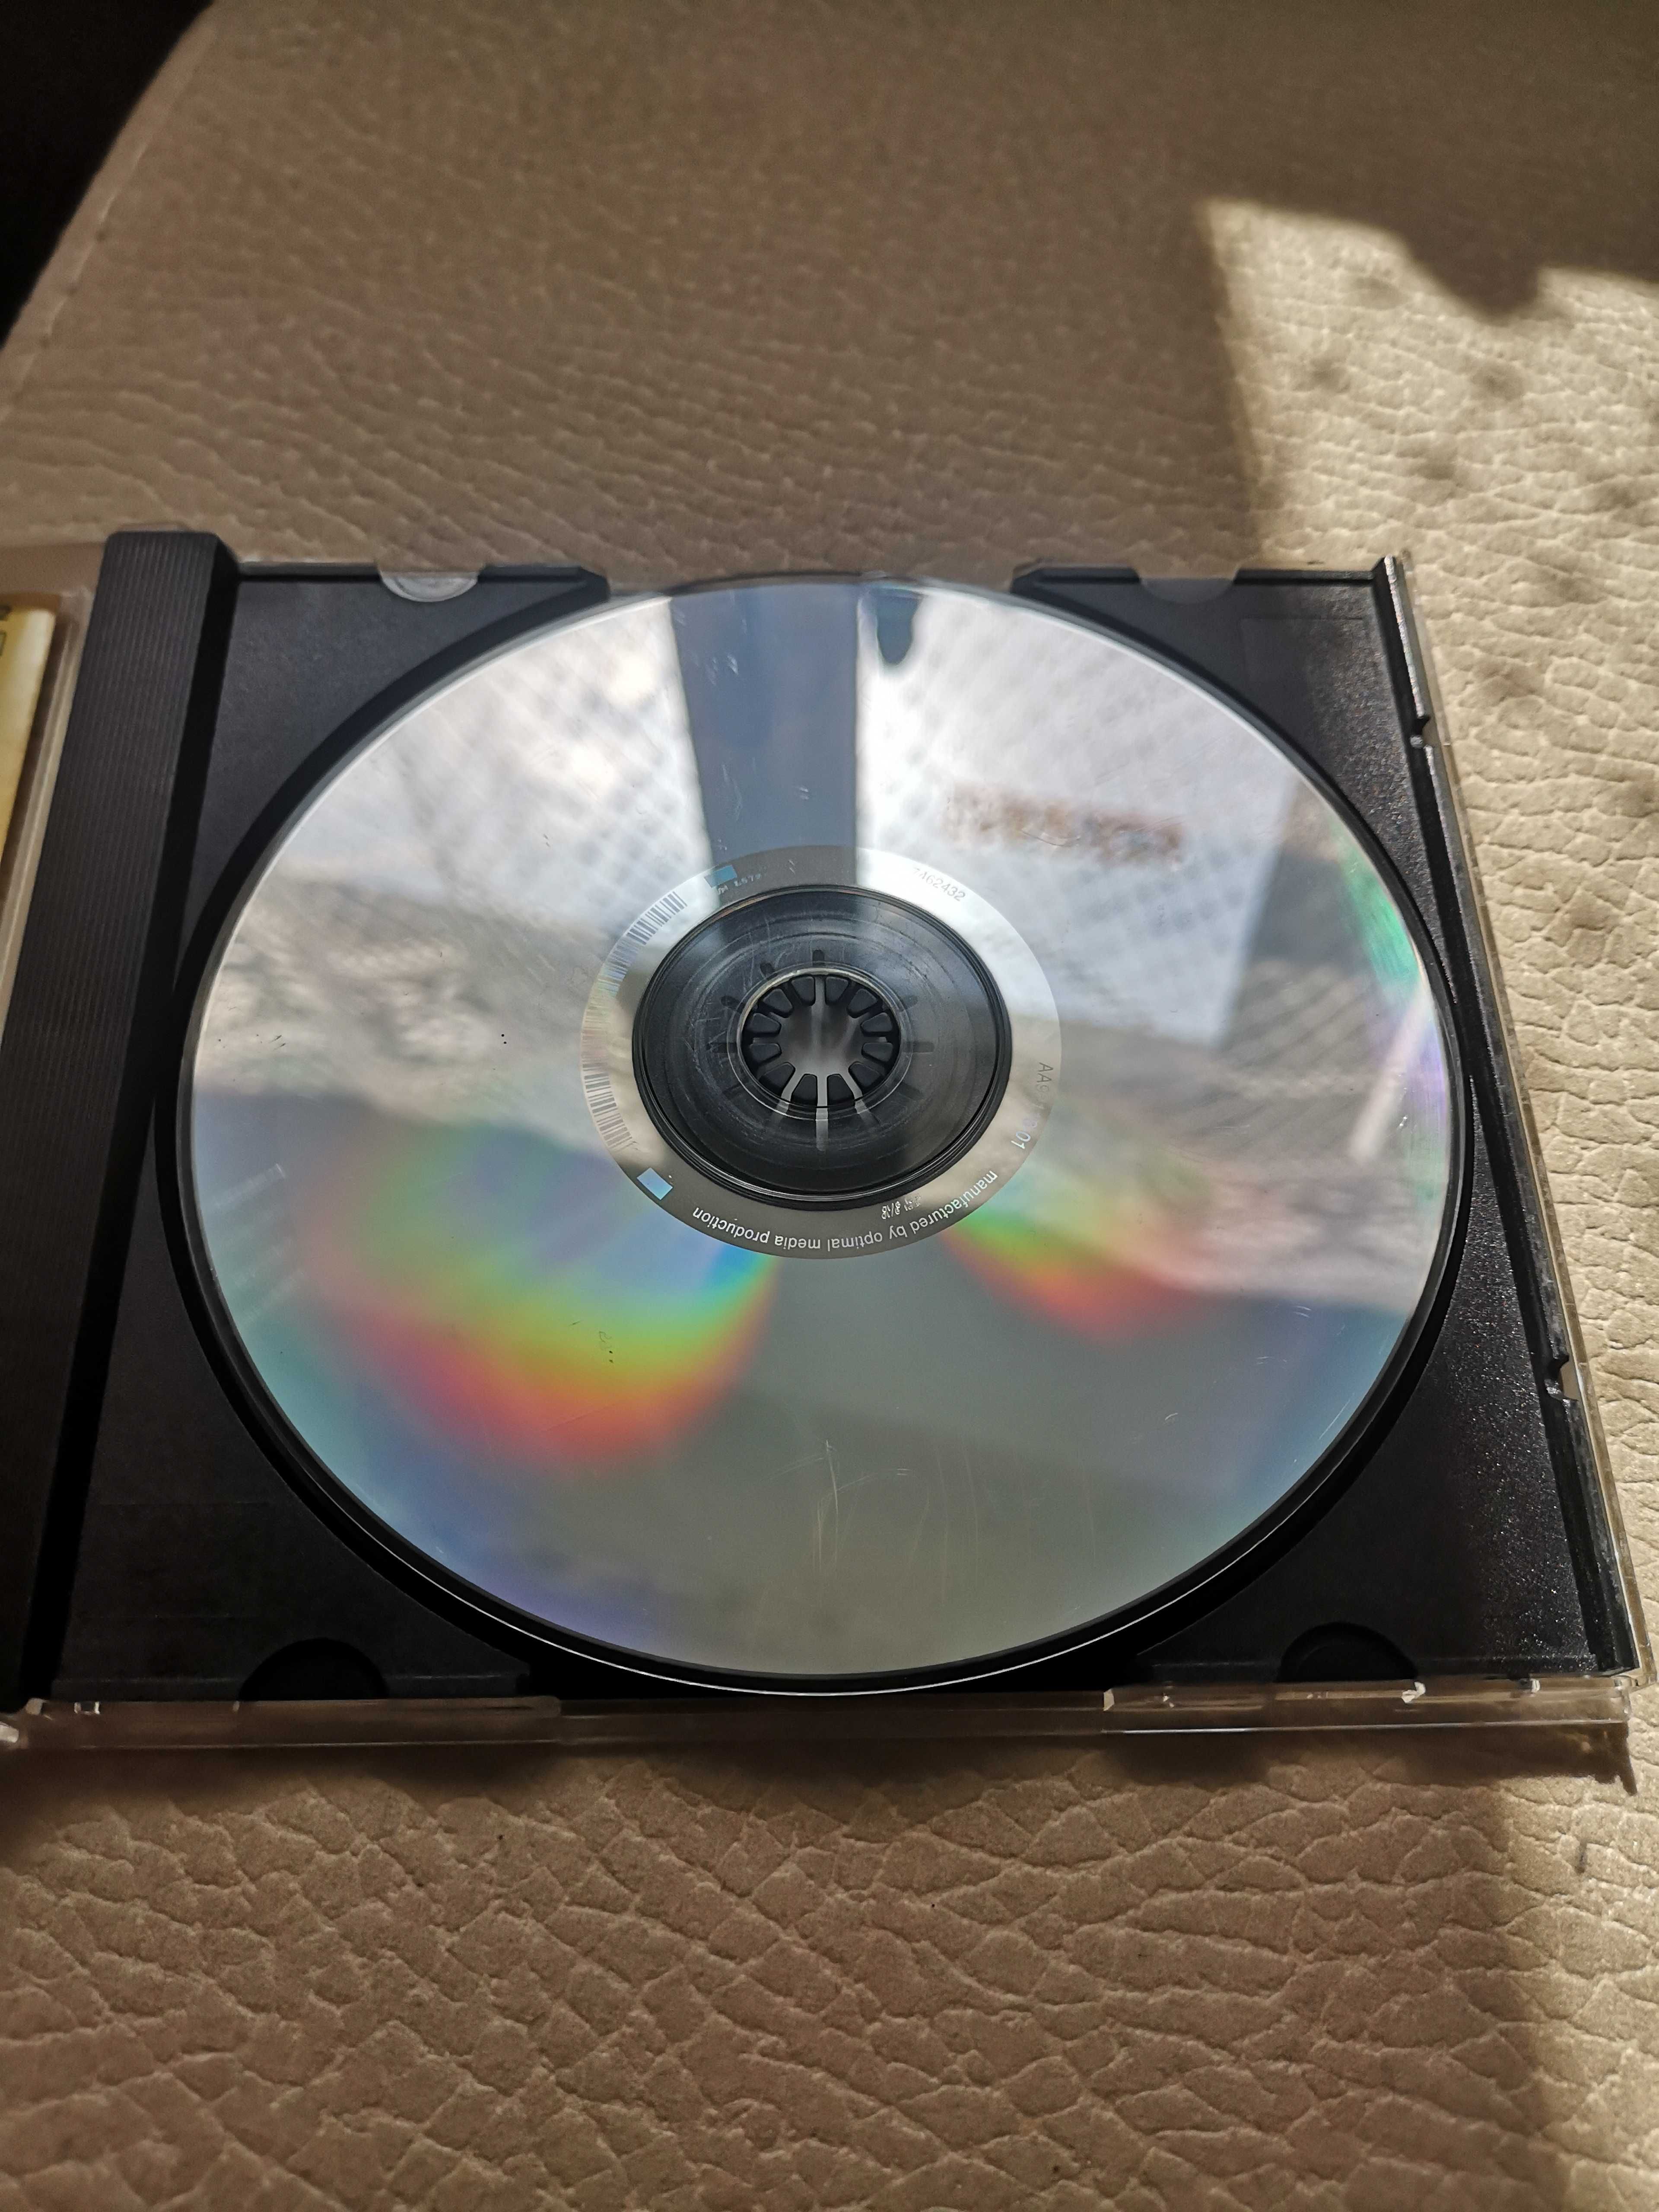 Płyta CD The Shadow 20 Golden Greats